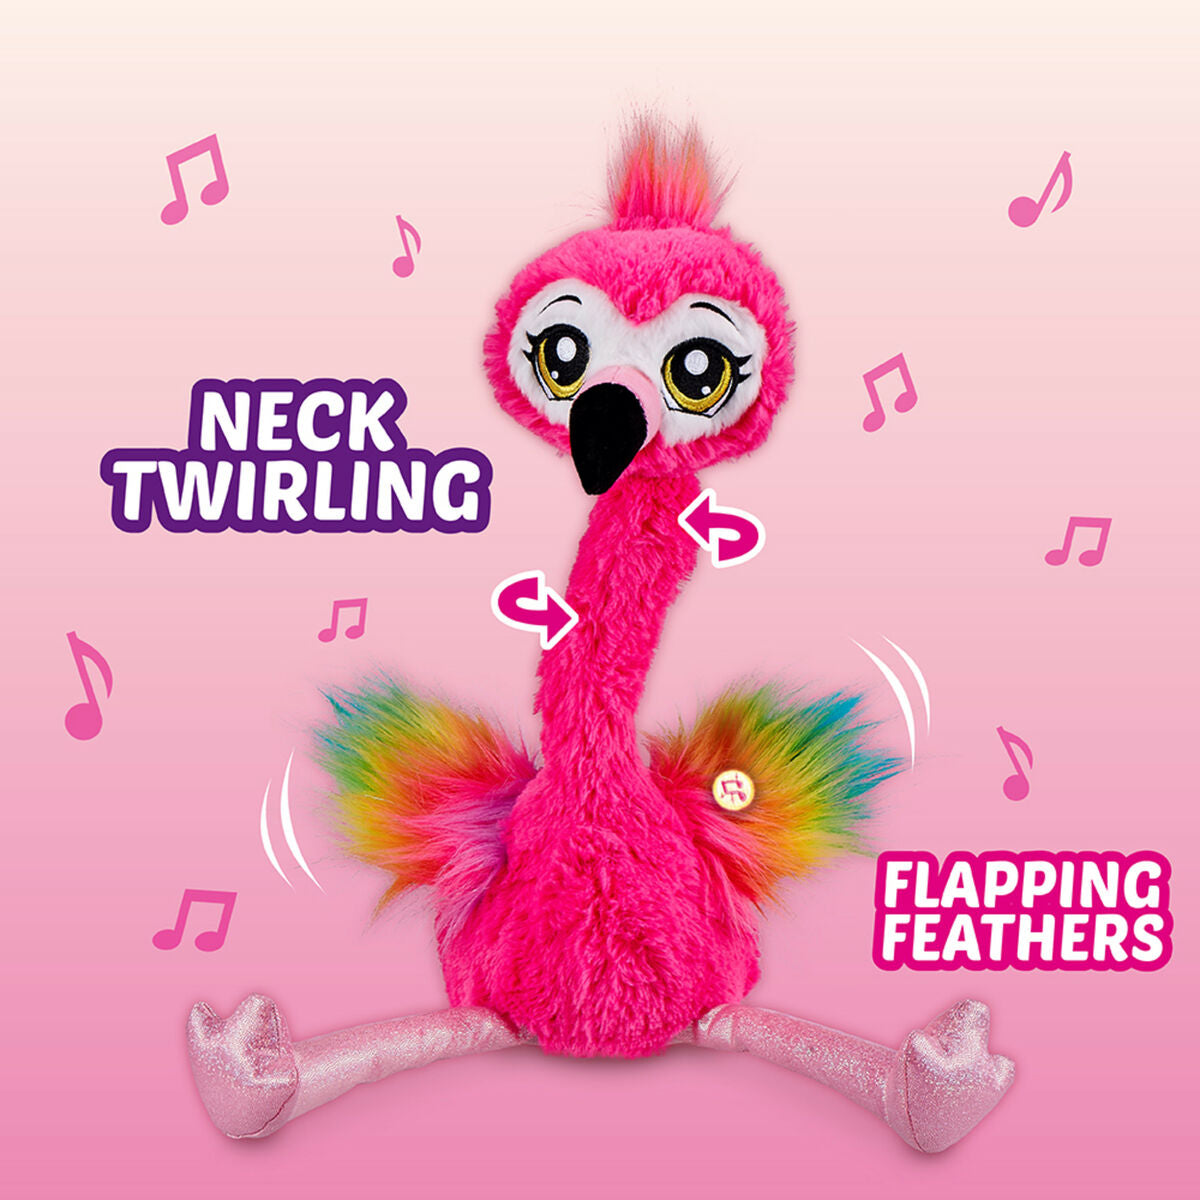 Zuru Pets Alive Frankie tanssiva Flamingo